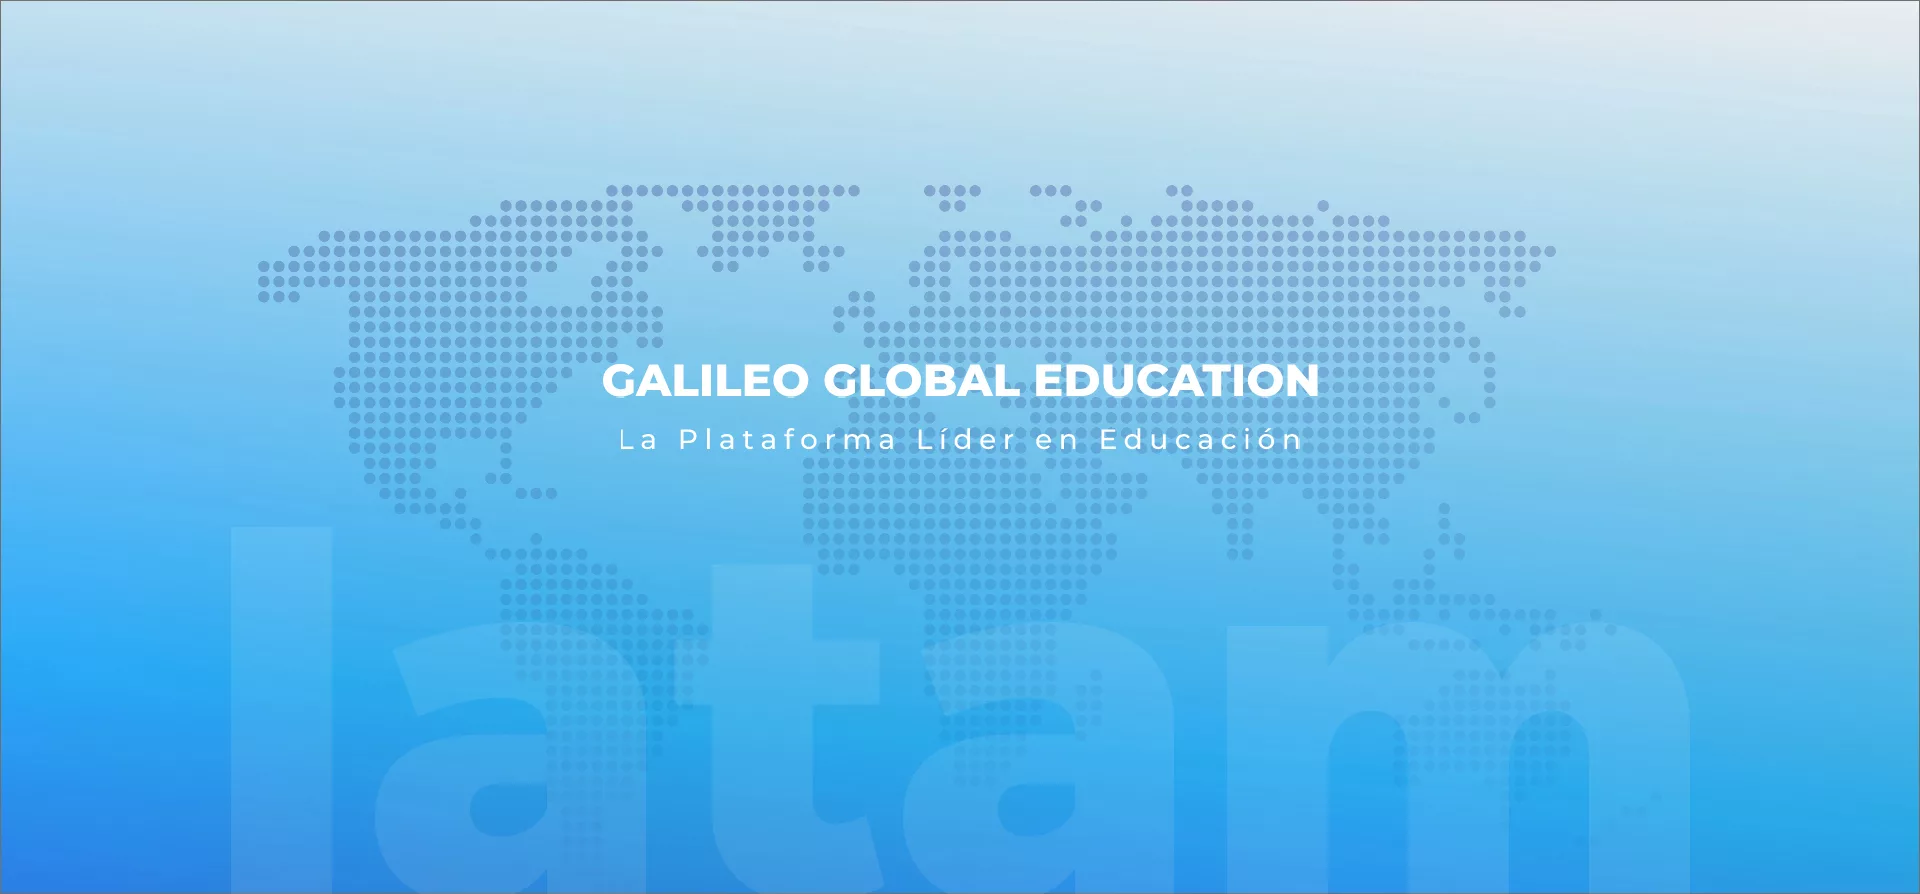 galileo global education la plataforma lider en educacion